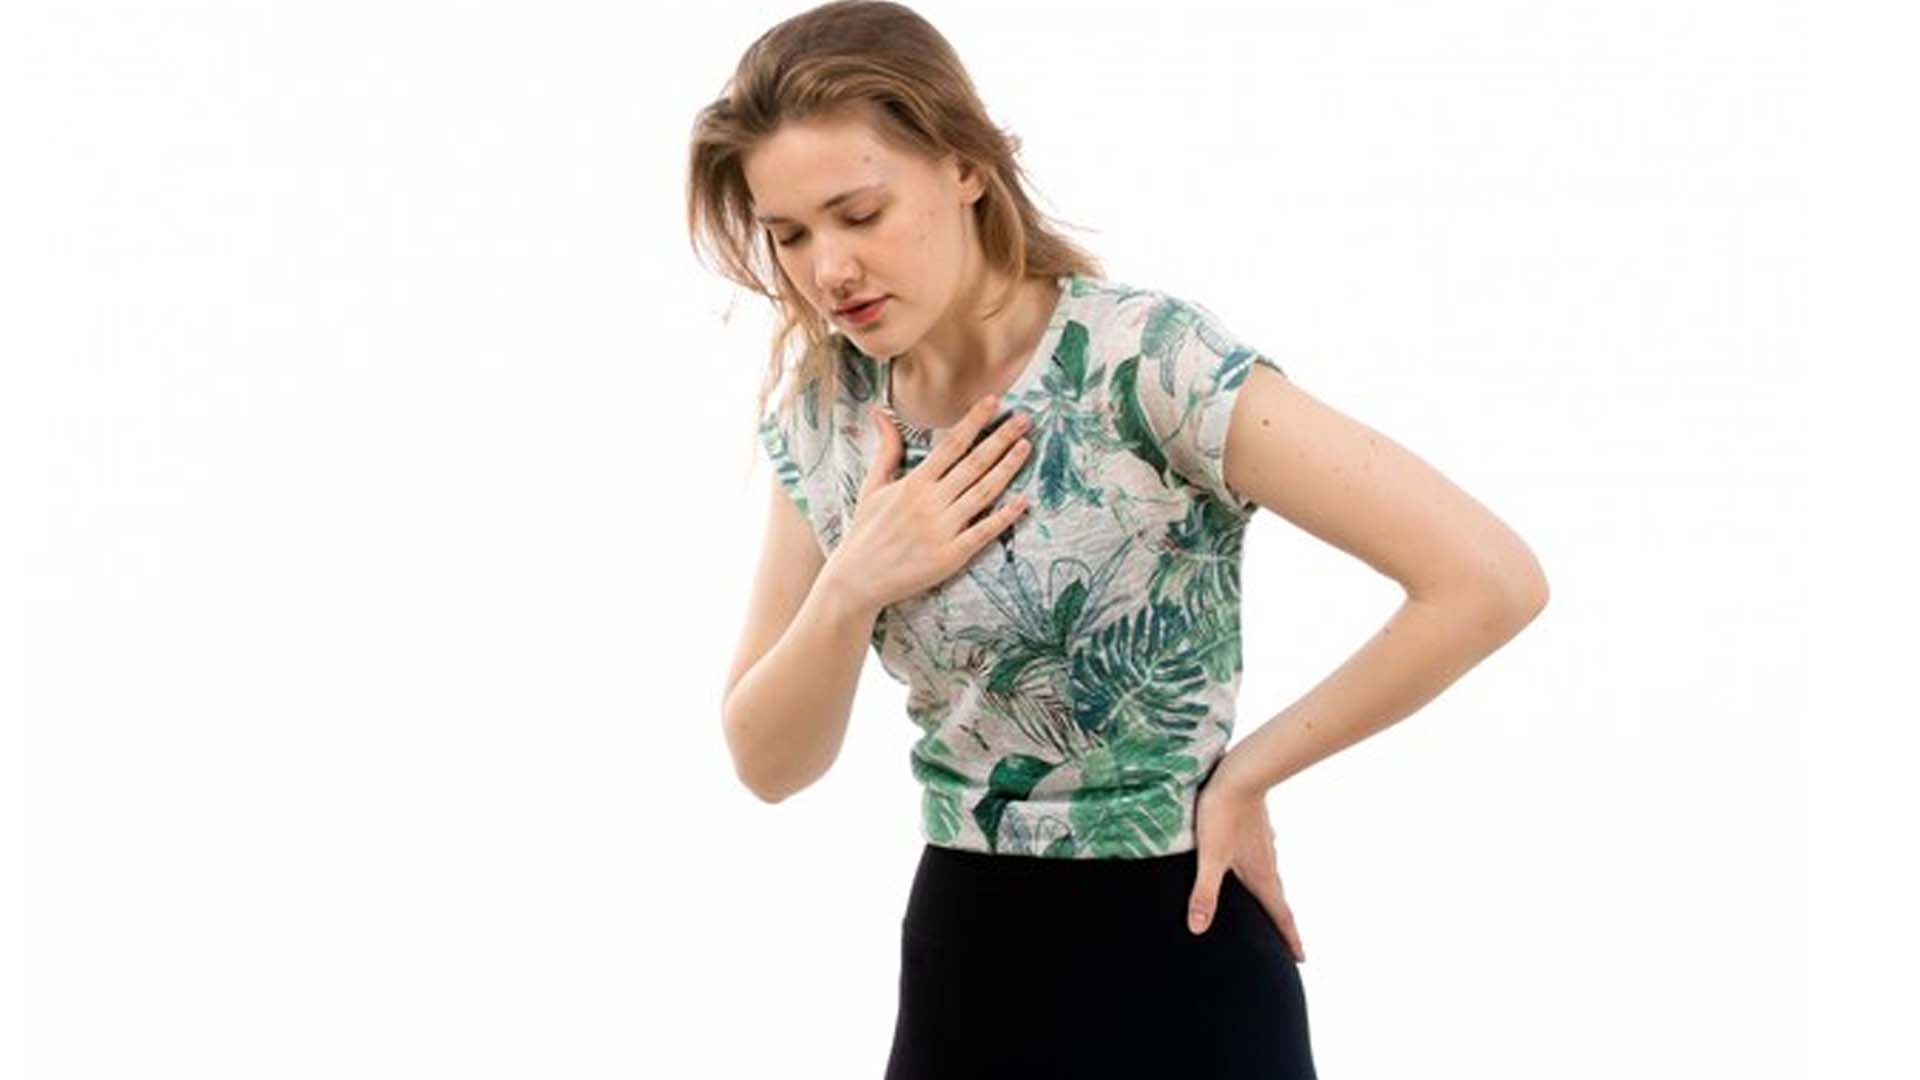 Heart palpitations or Irregular heartbeats